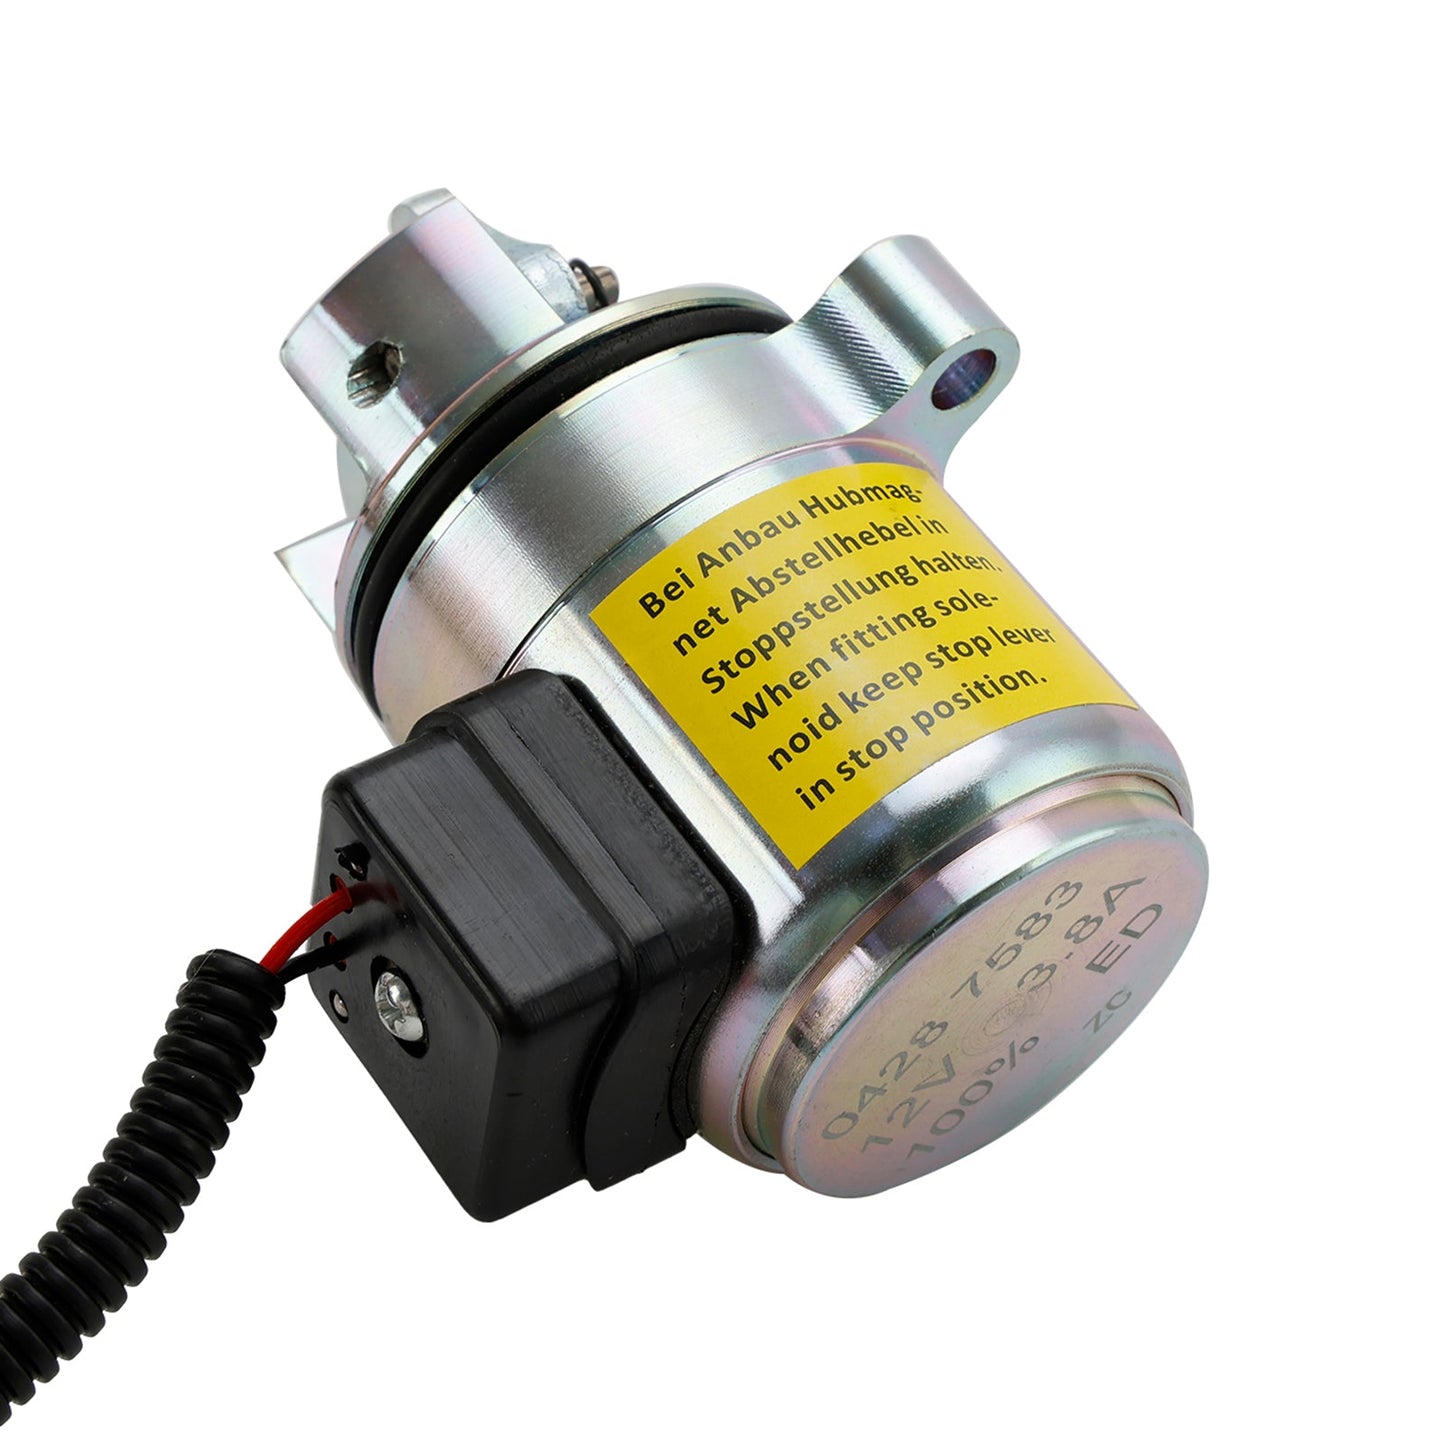 0428-7583 0428-7116 12-V-Kraftstoffabschaltmagnetventil, kompatibel mit Deutz 1011 2011